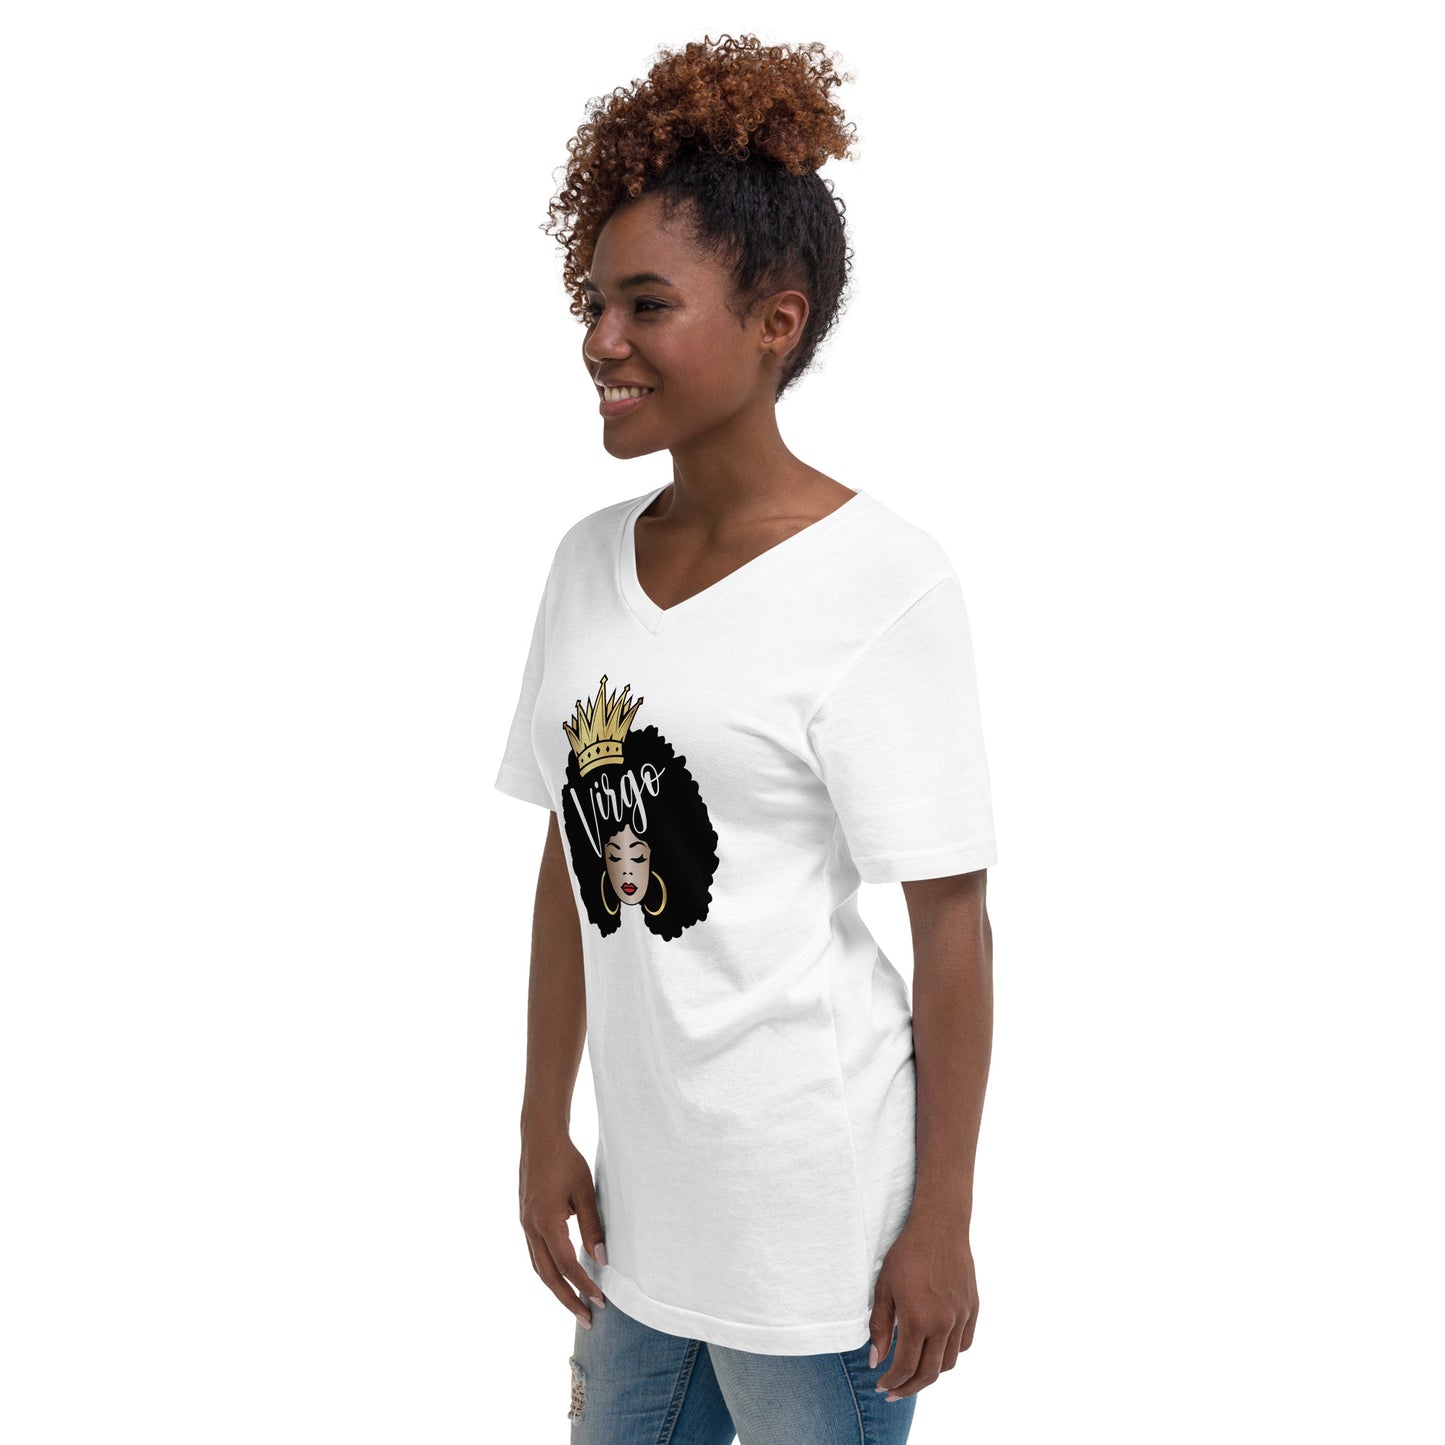 Women's Short Sleeve V-Neck T-Shirt - Virgo Afro Queen